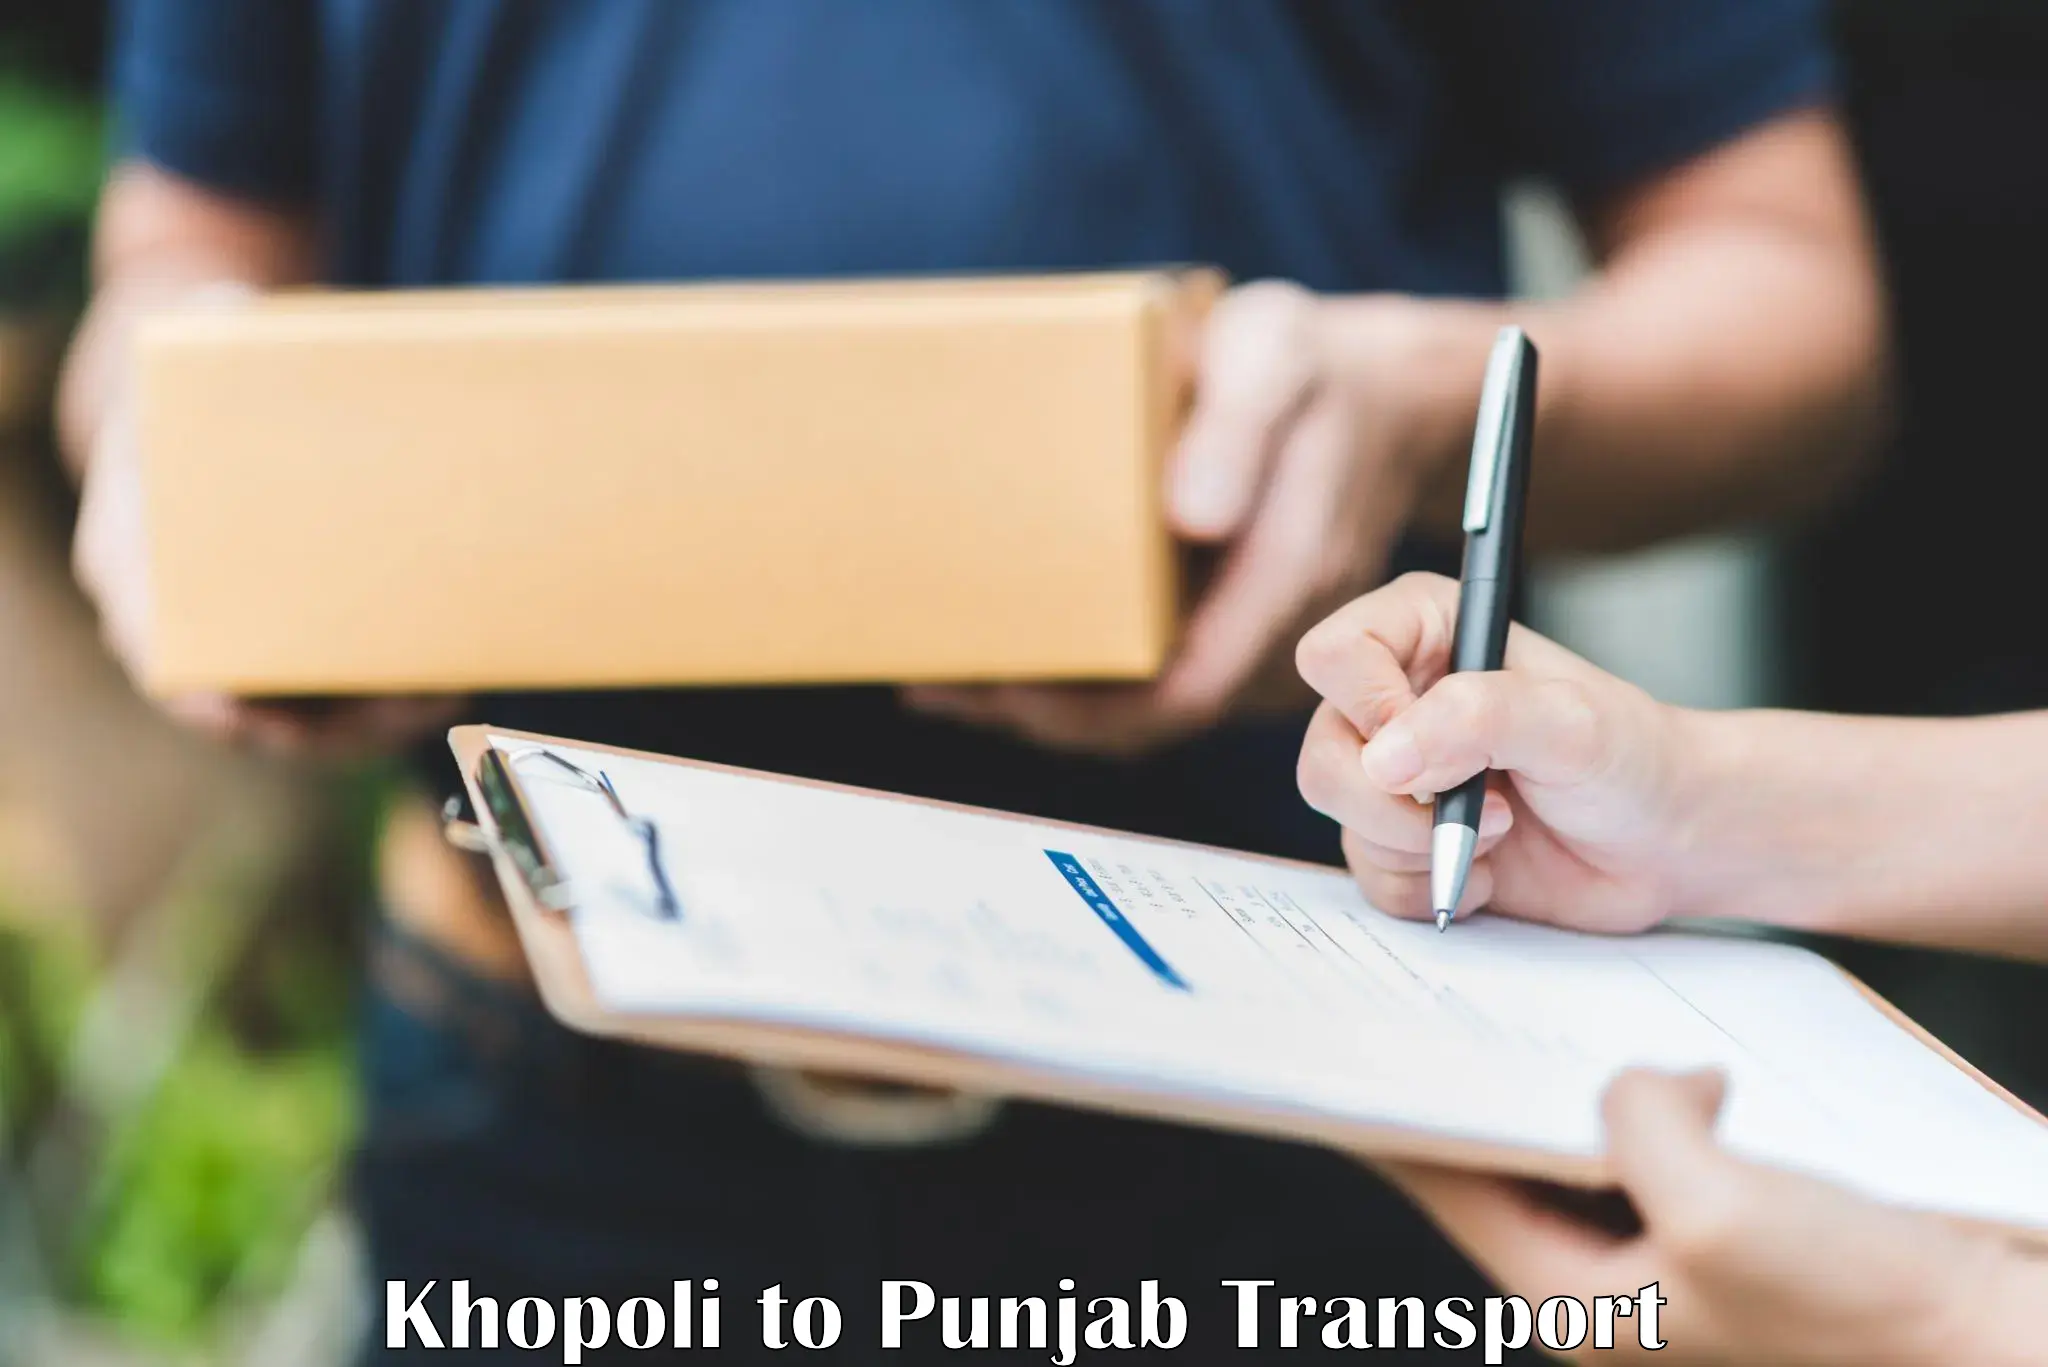 Online transport service Khopoli to Punjab